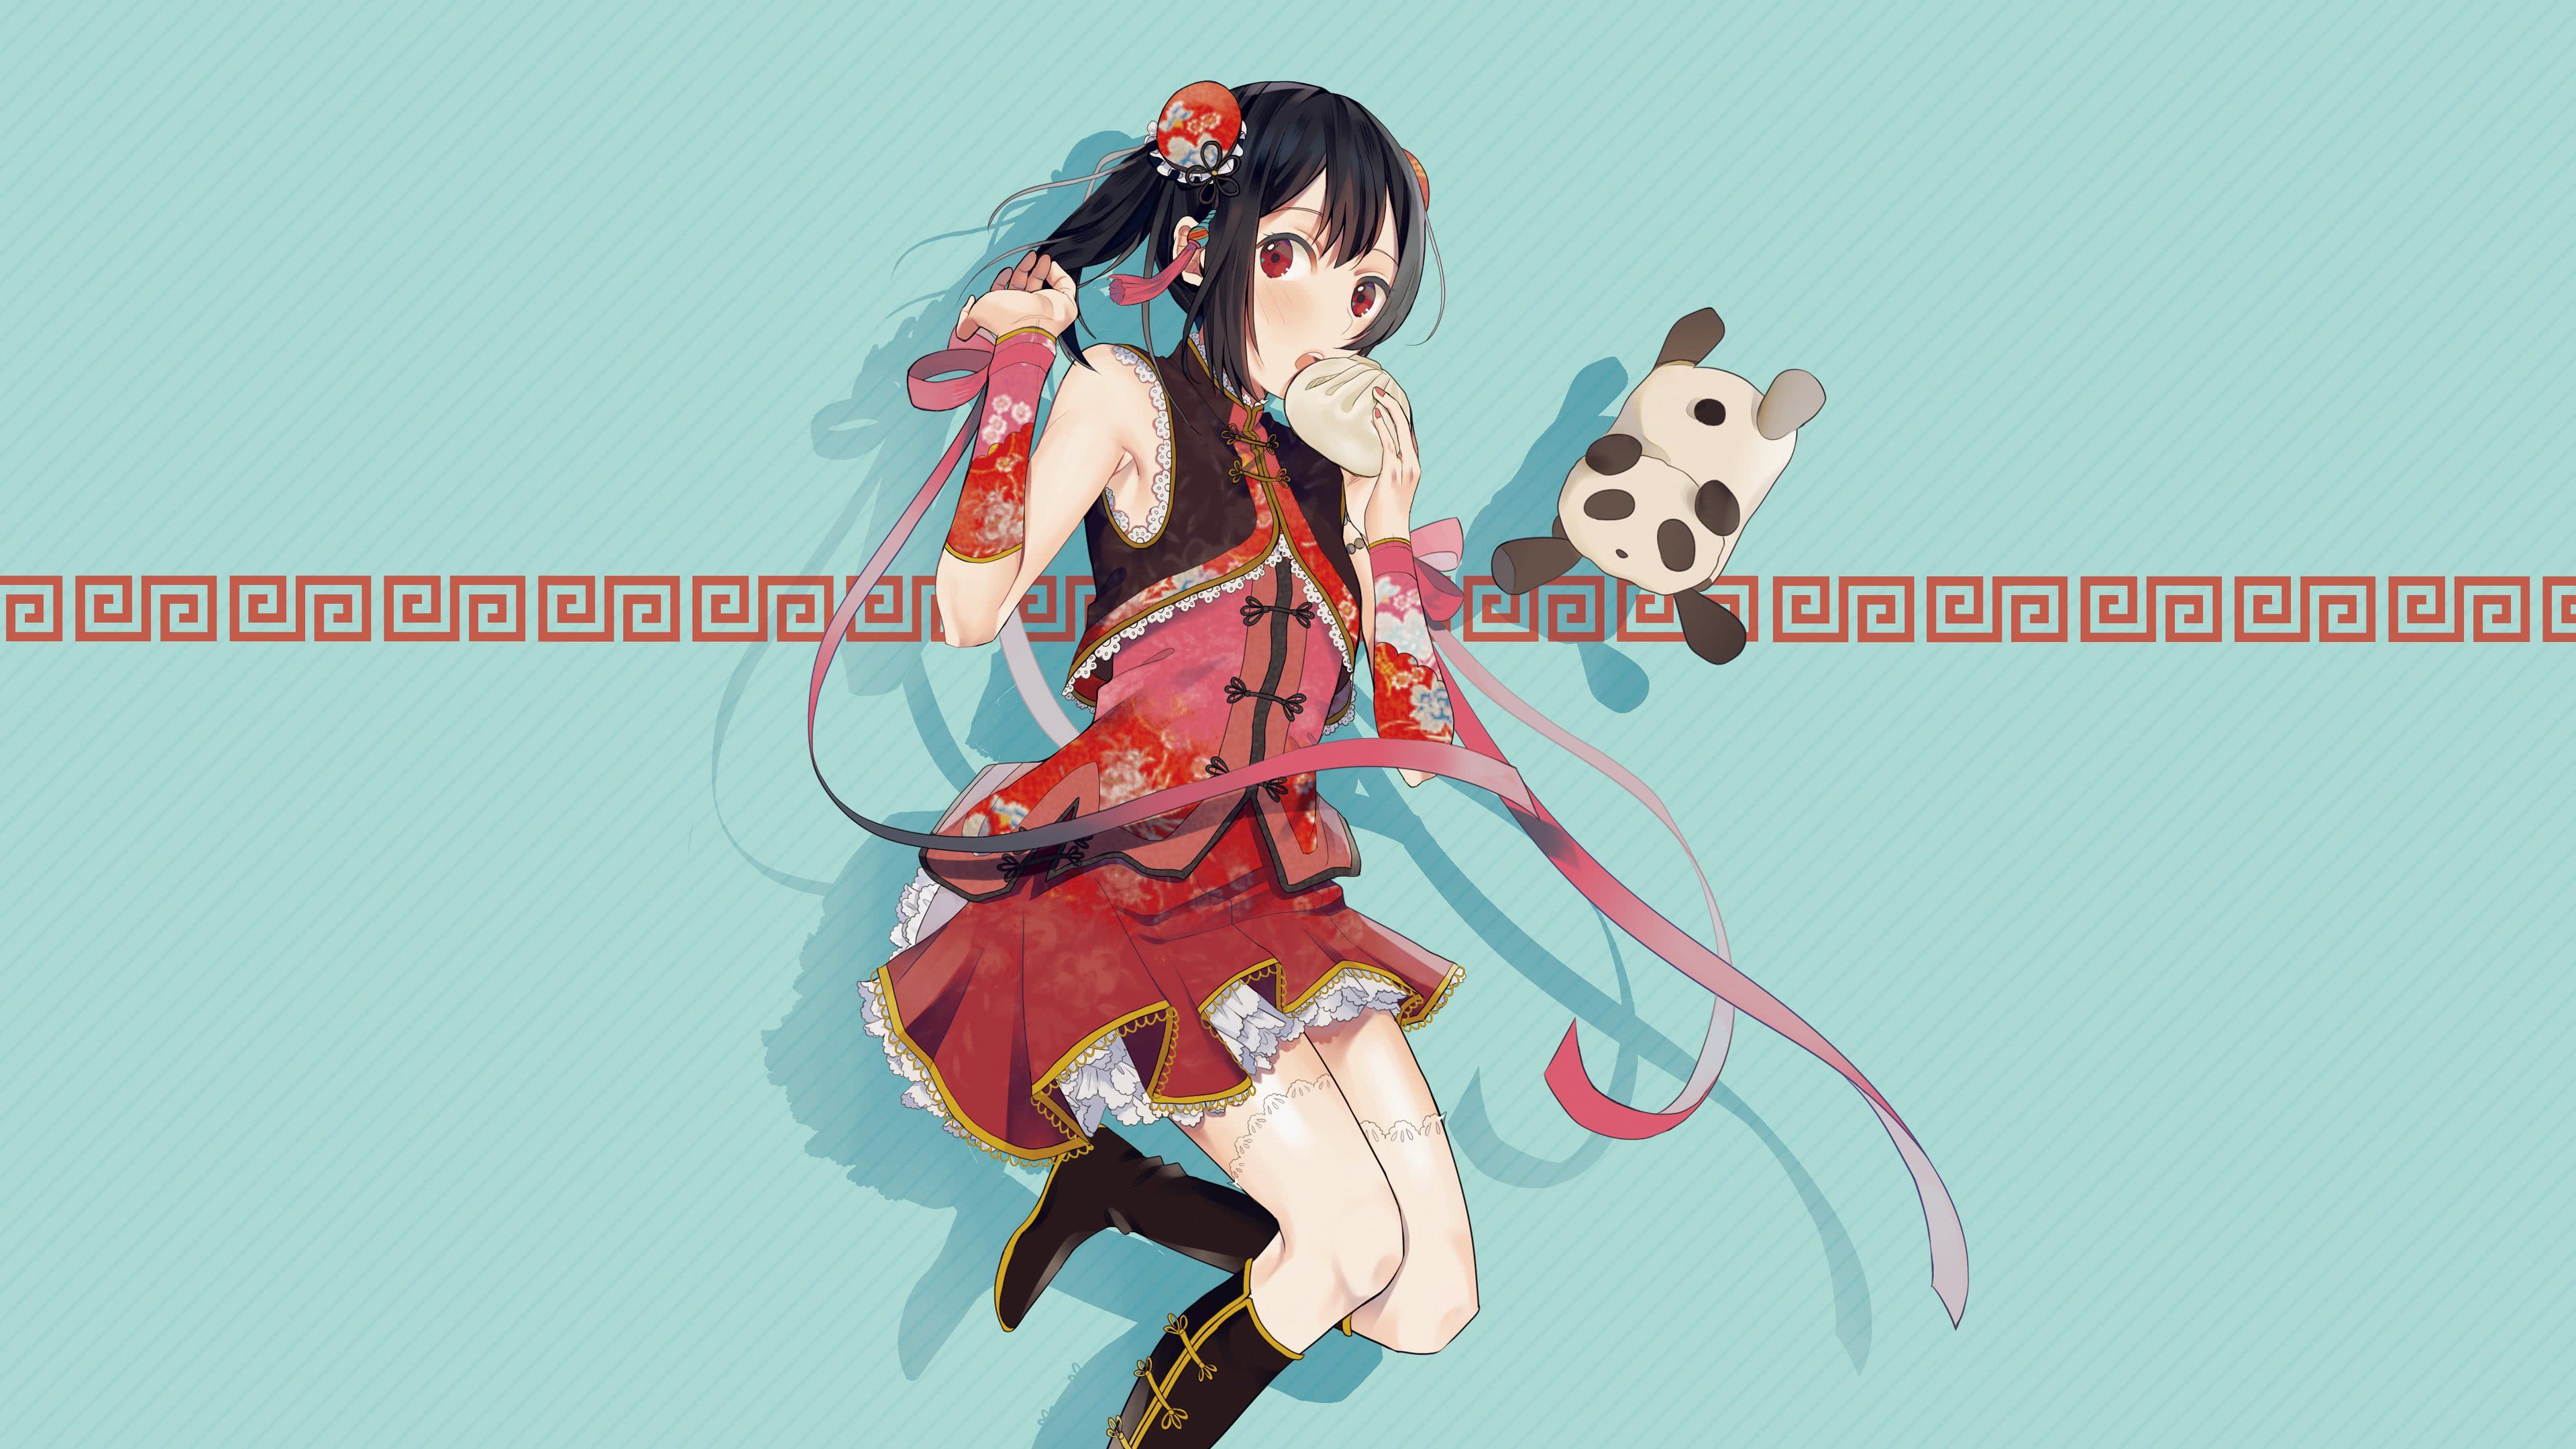 Free download Kawaii Anime Girl UHD 4K Wallpaper Pixelz 3840x2160